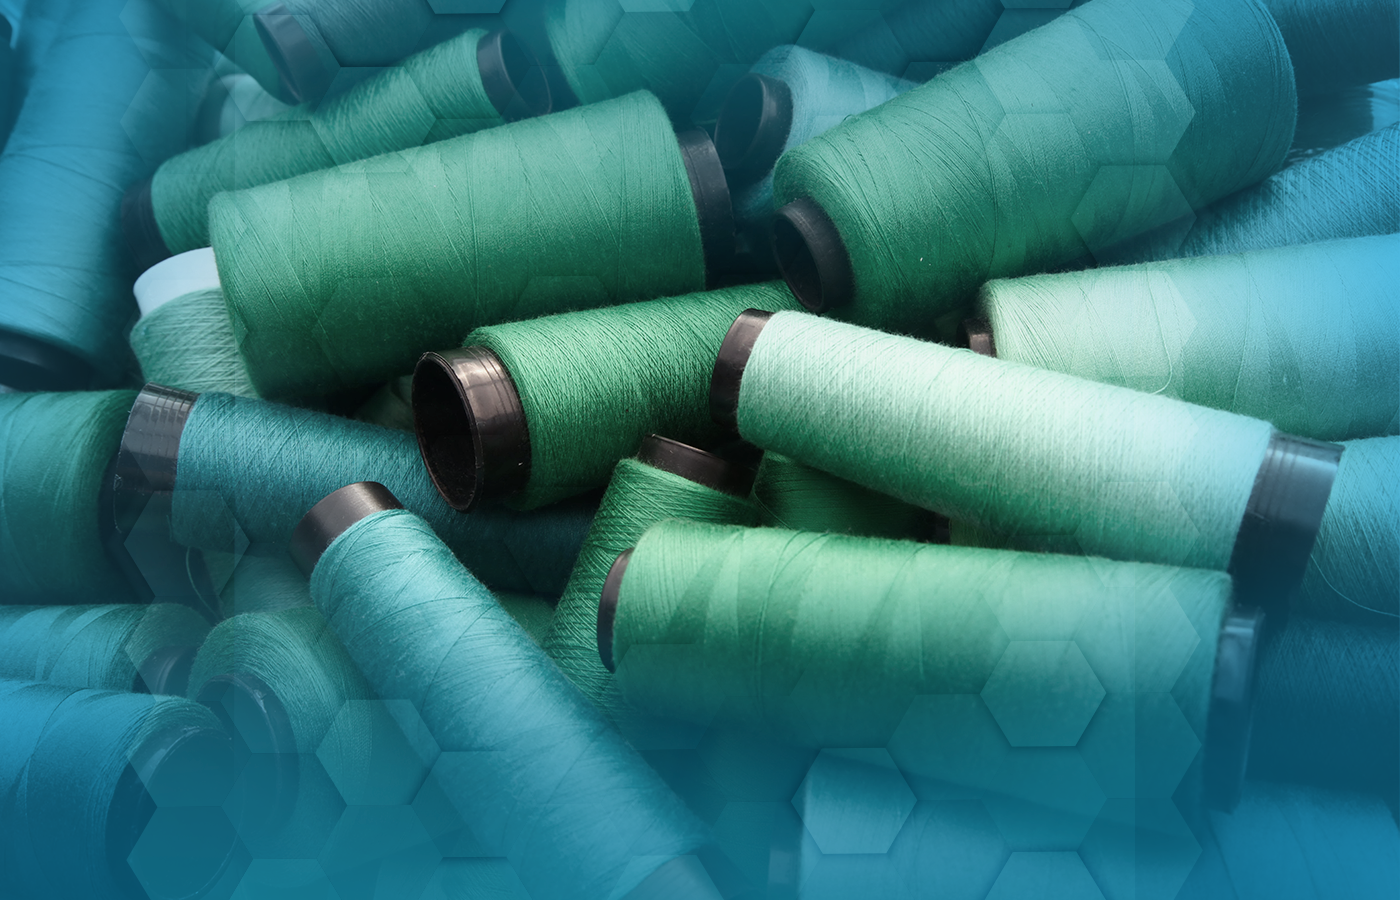 Indústria têxtil: a moda é tornar-se sustentável